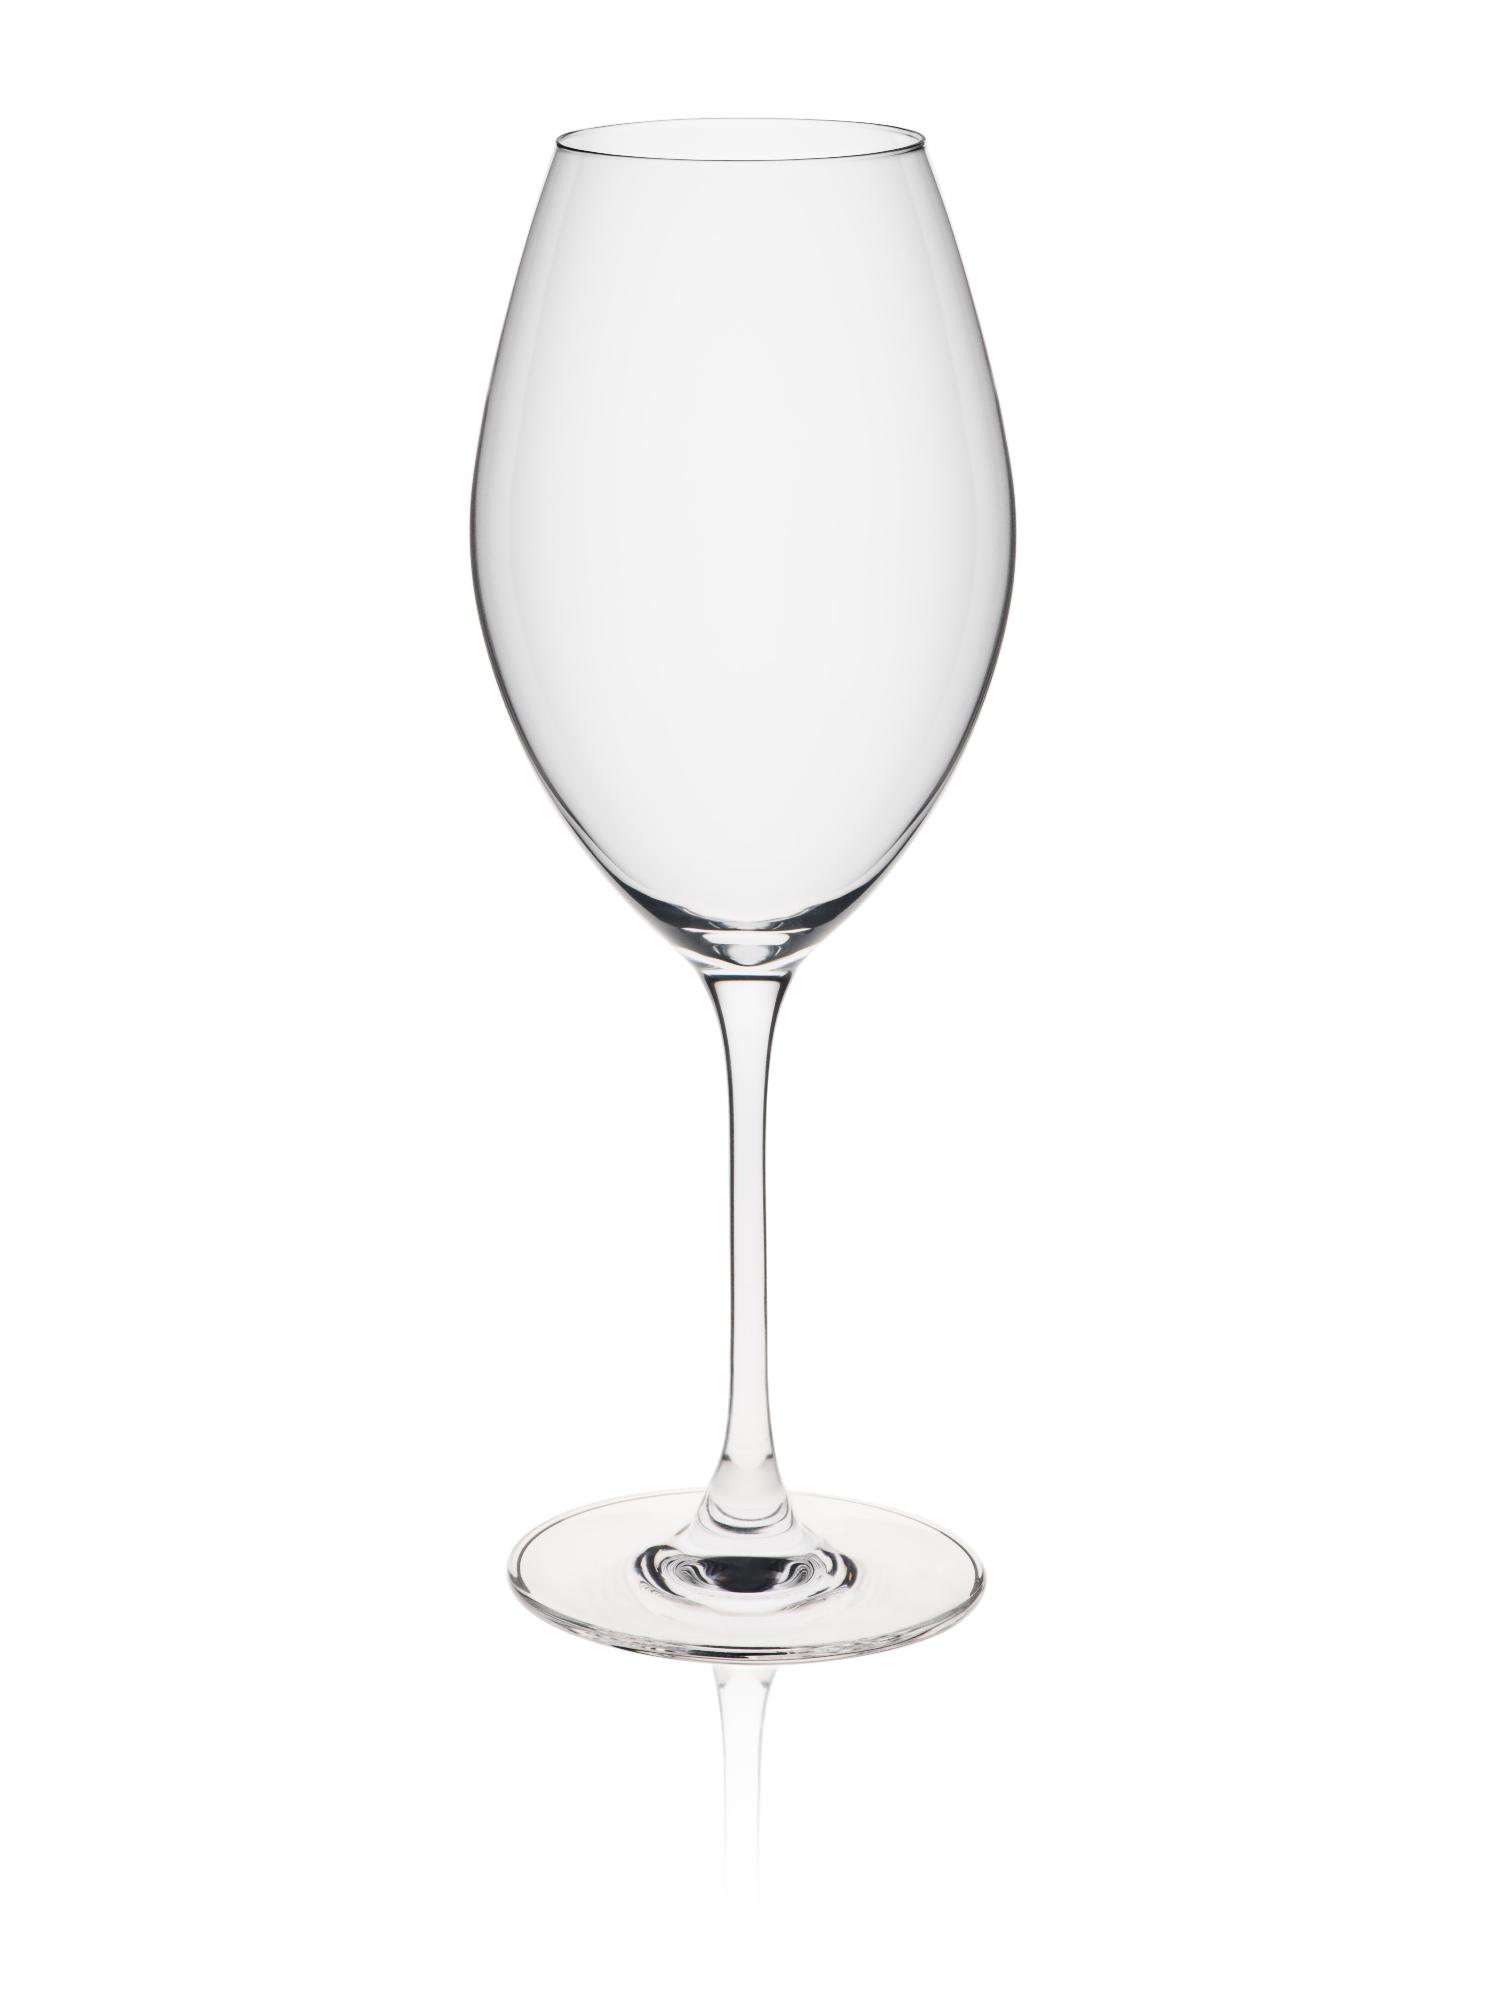 Le Vin Syrah/Pinot Noir glass, 510ml